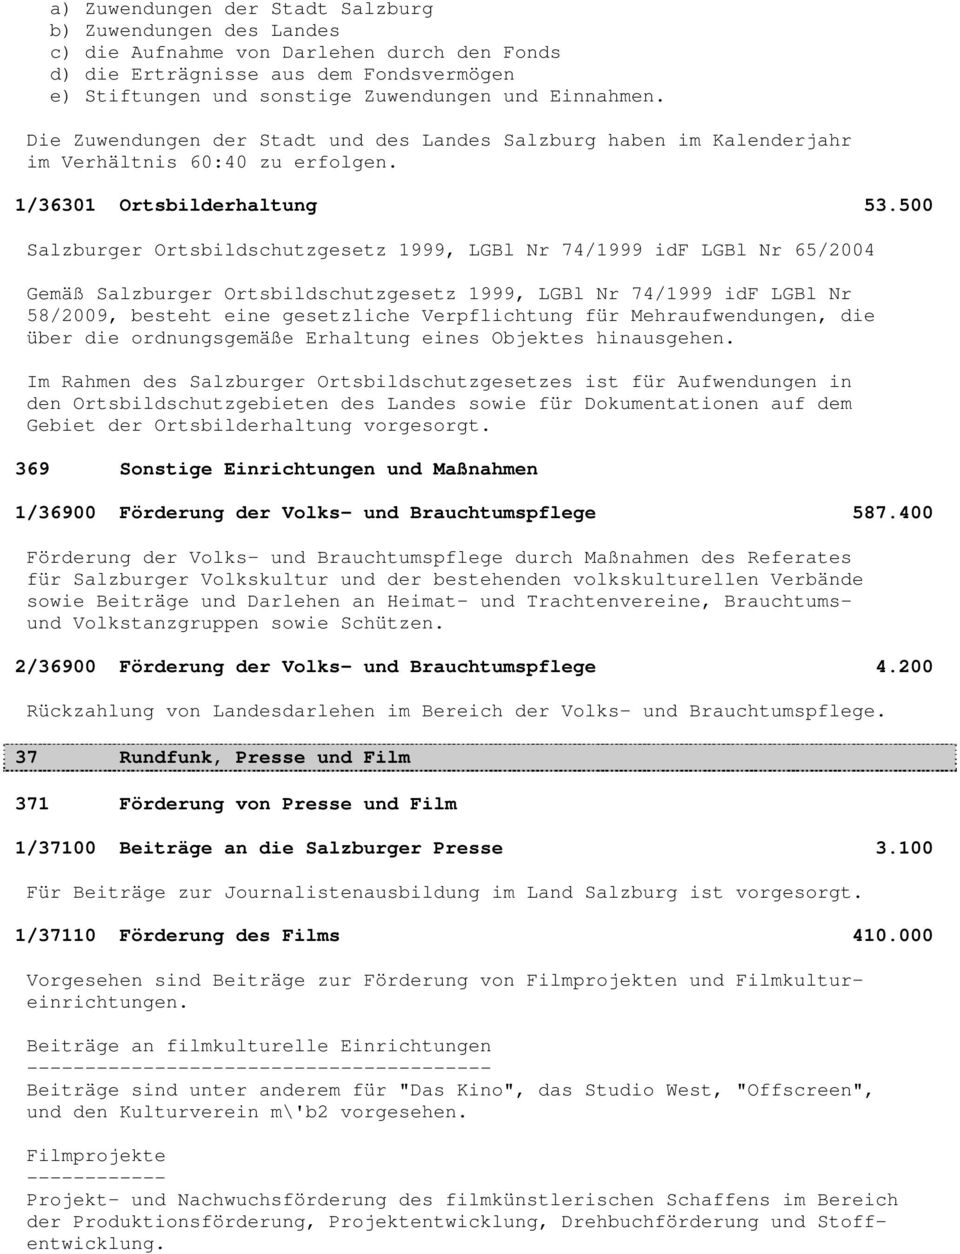 500 Salzburger Ortsbildschutzgesetz 1999, LGBl Nr 74/1999 idf LGBl Nr 65/2004 Gemäß Salzburger Ortsbildschutzgesetz 1999, LGBl Nr 74/1999 idf LGBl Nr 58/2009, besteht eine gesetzliche Verpflichtung